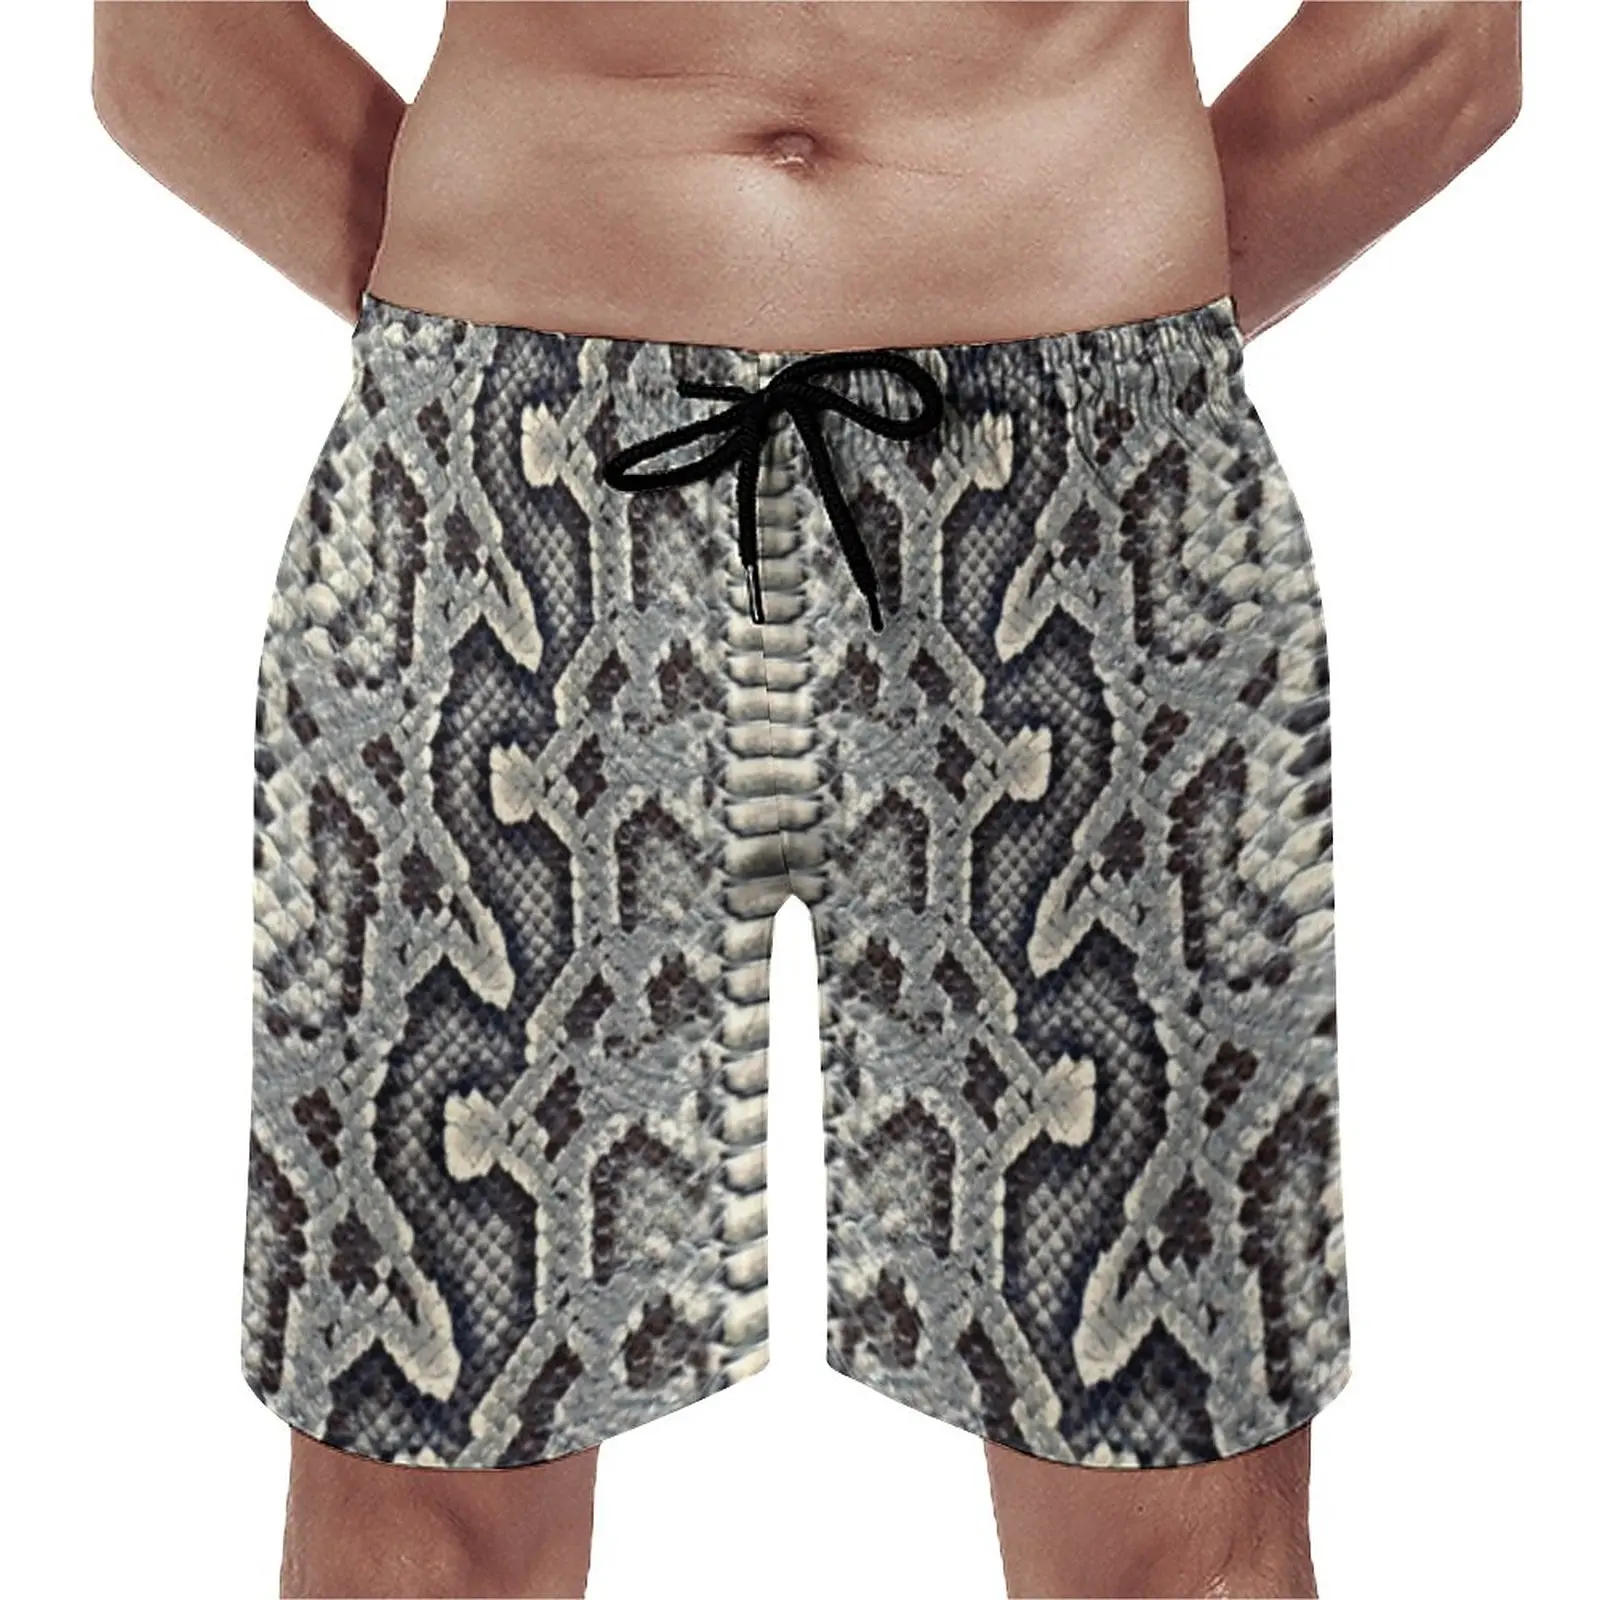 

Board Shorts Grey Snakeskin Swimming Trunks Animal Print Males Quick Drying Running Surf Trendy Plus Size Beach Short Pants